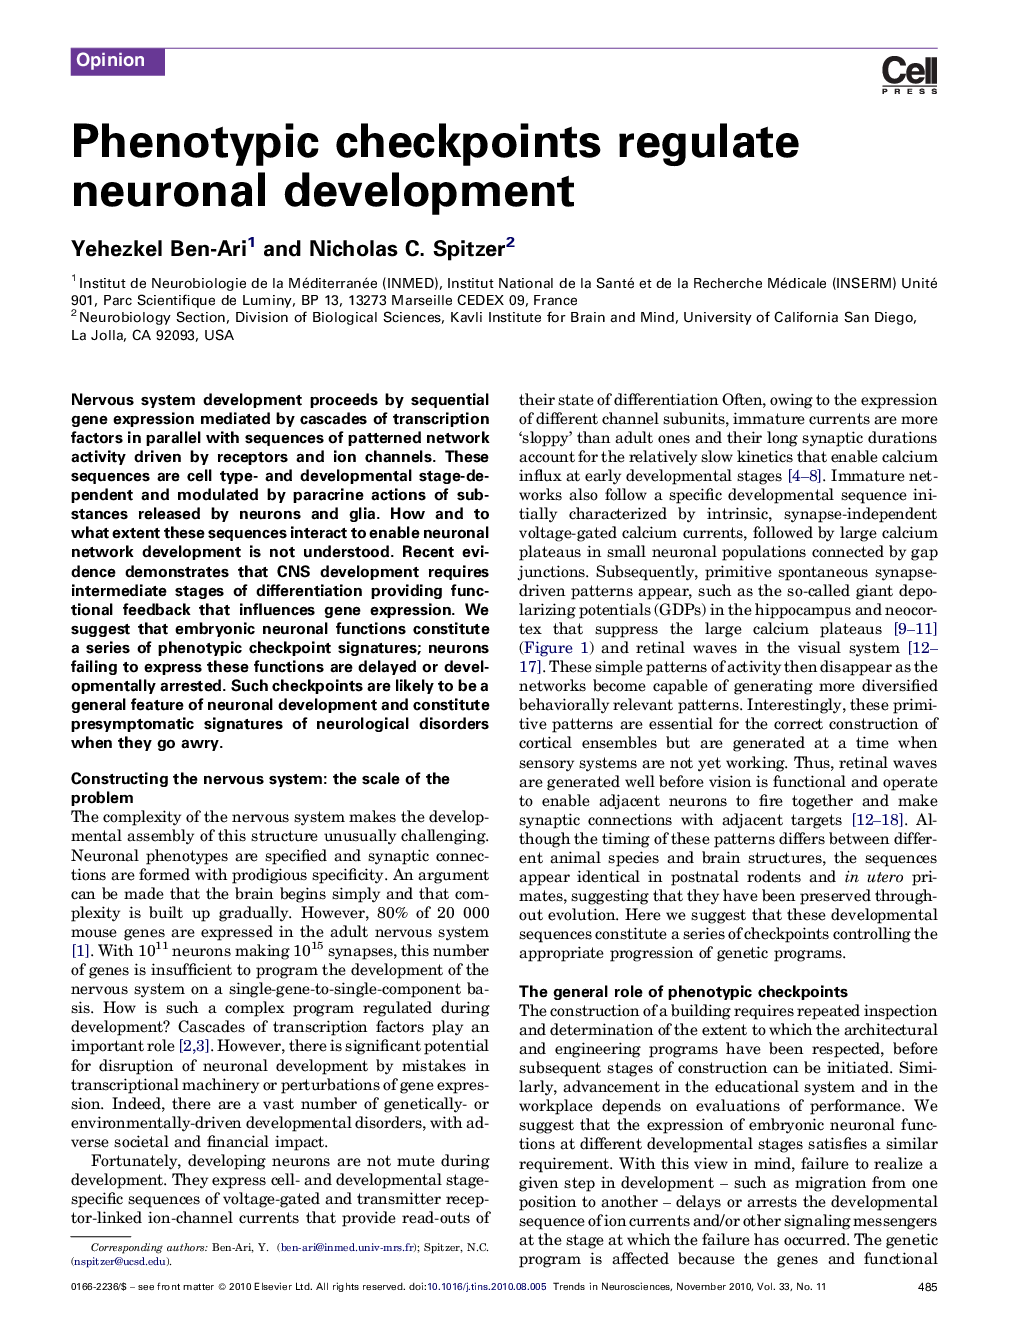 Phenotypic checkpoints regulate neuronal development